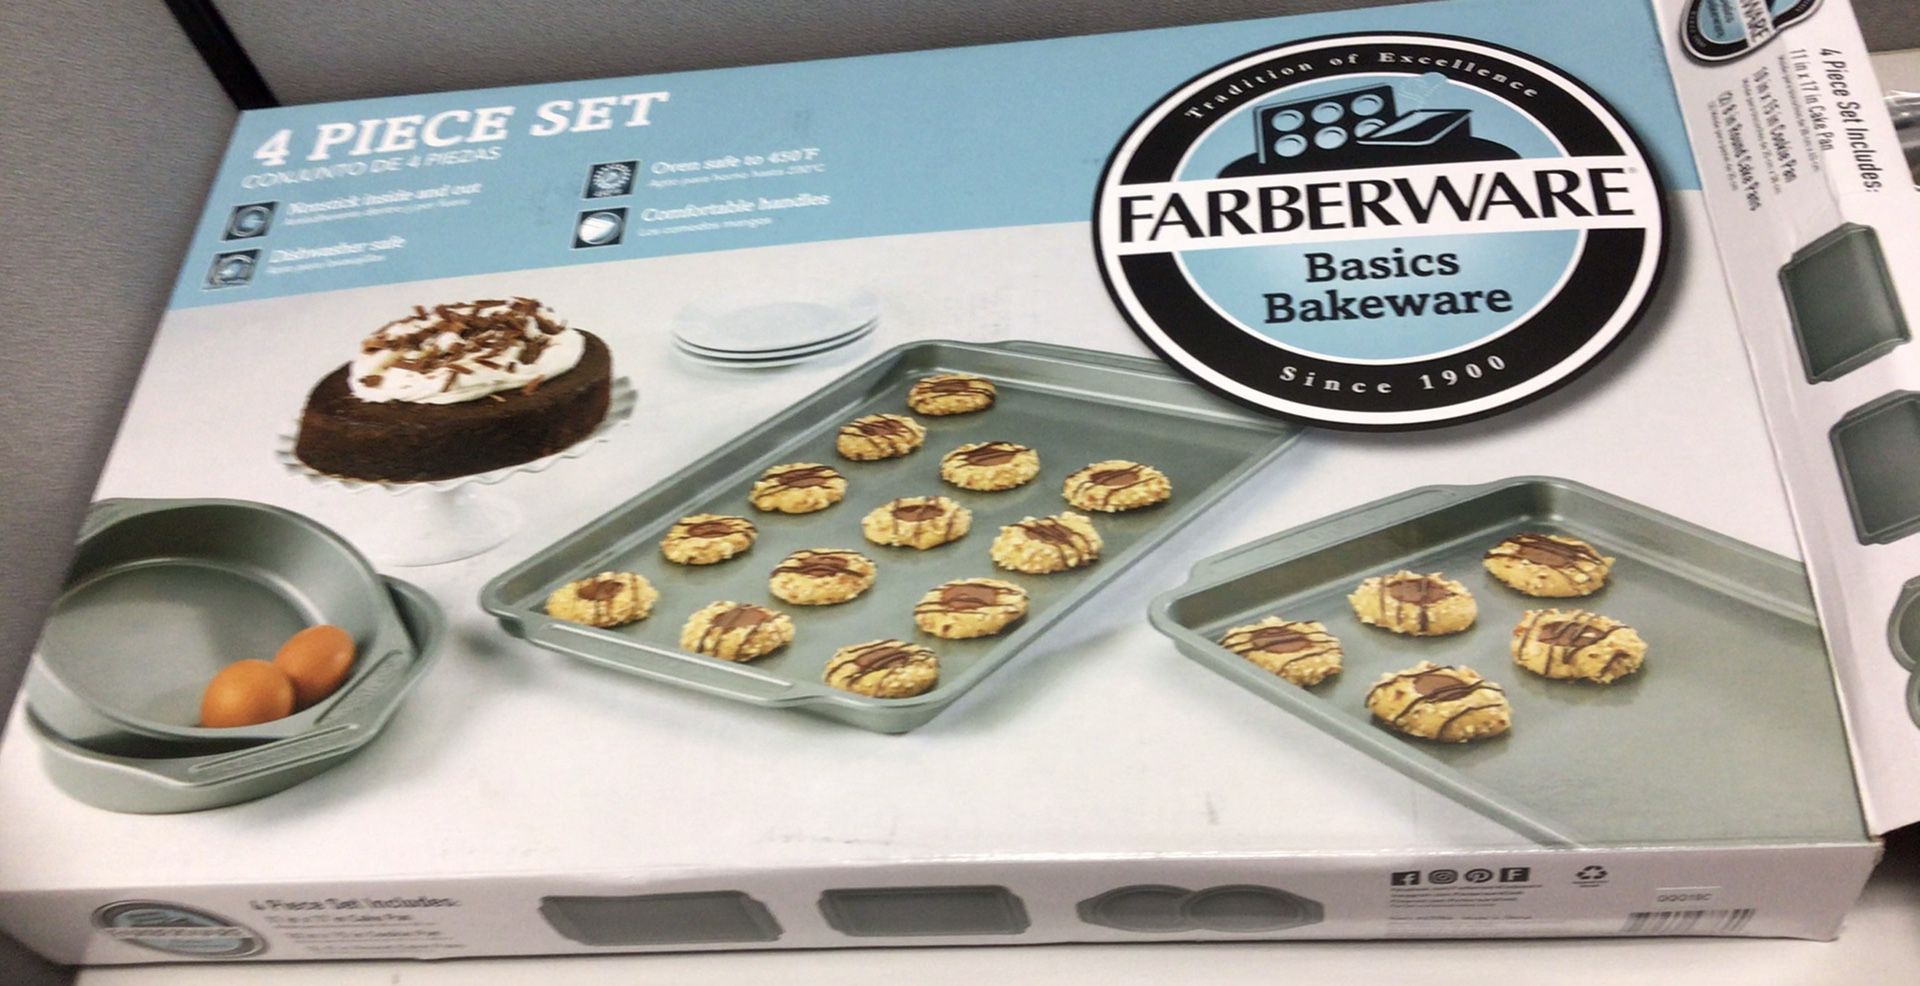 Farberware 4-Piece set basic bakeware